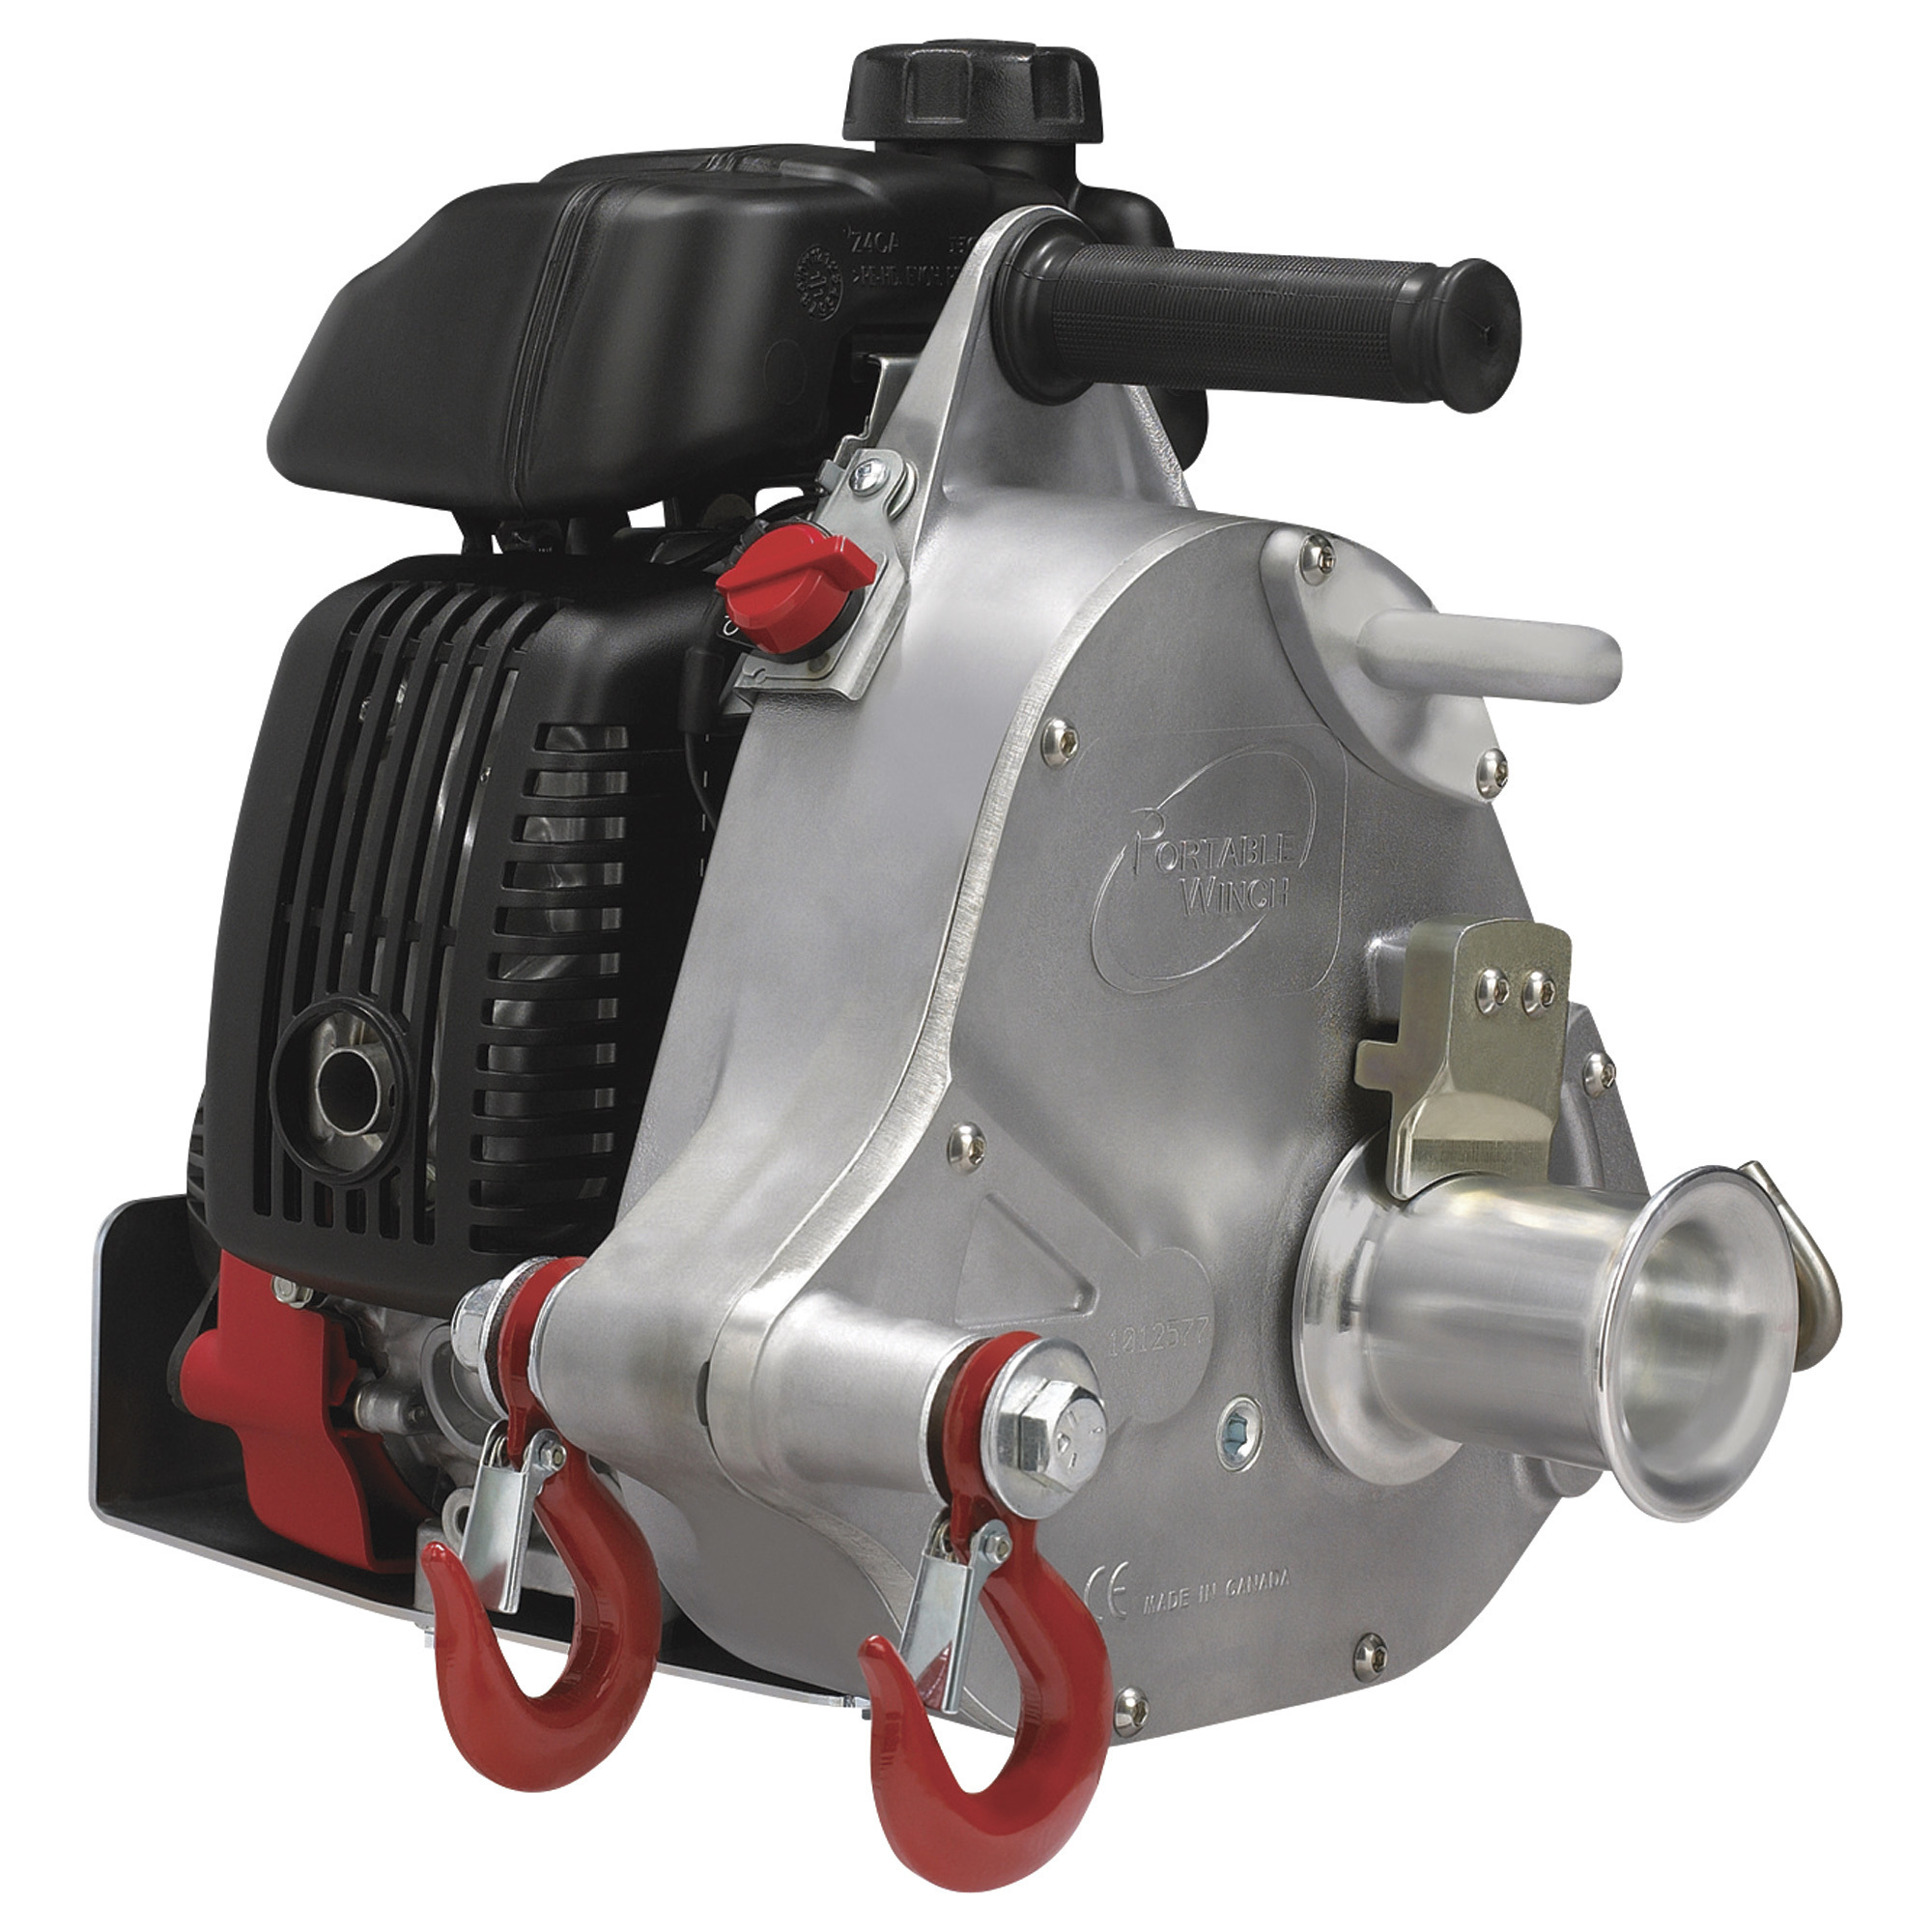 Portable Winch Gas-Powered Capstan Winch â 2,200-Lb. Pulling Capacity, 2.1 HP, Honda GHX-50 Engine, Model PCW5000